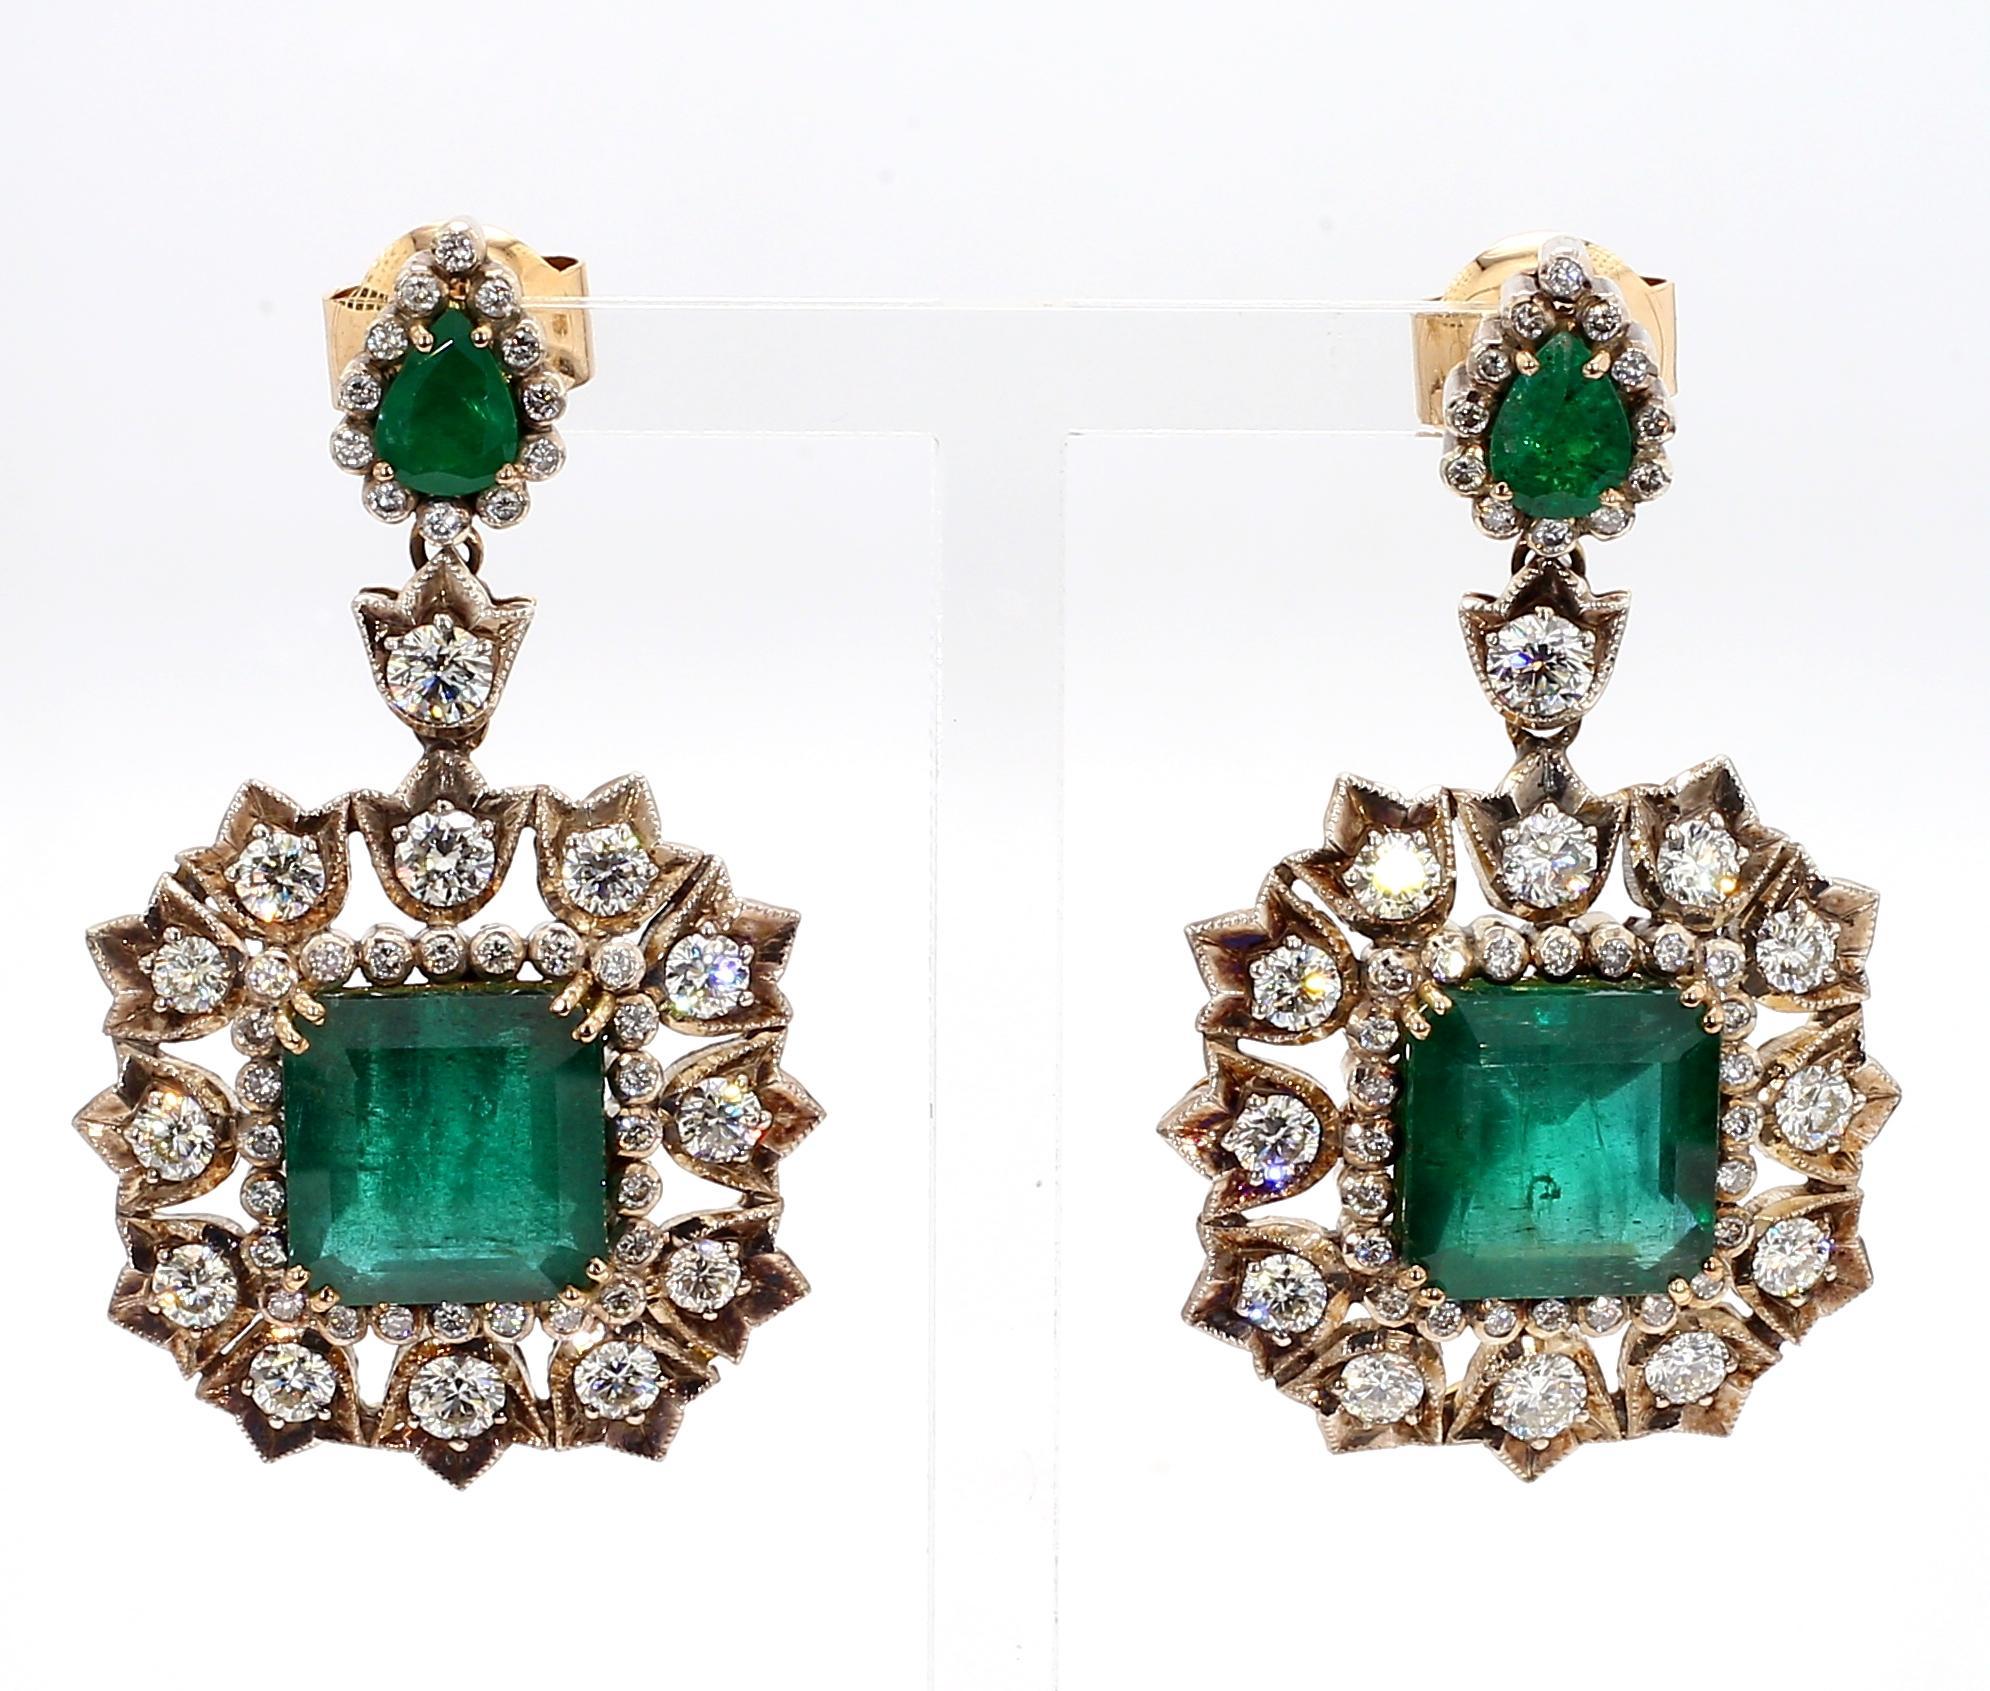 Mixed Cut The York - 16.1 Carat Zambian Emerald and 5.4 Carat Diamond Earrings 18K Gold For Sale